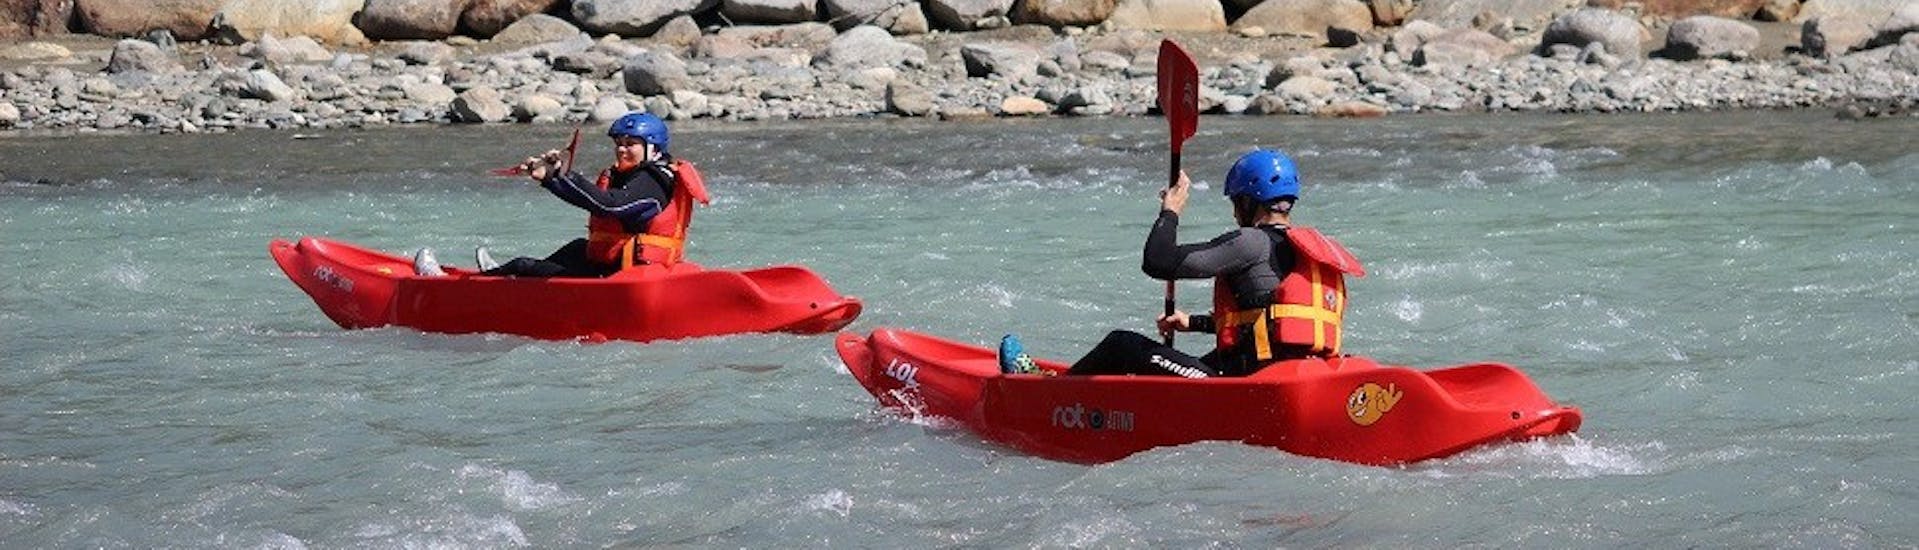 Canoë-kayak  sportif à Castione Andevenno - Adda.